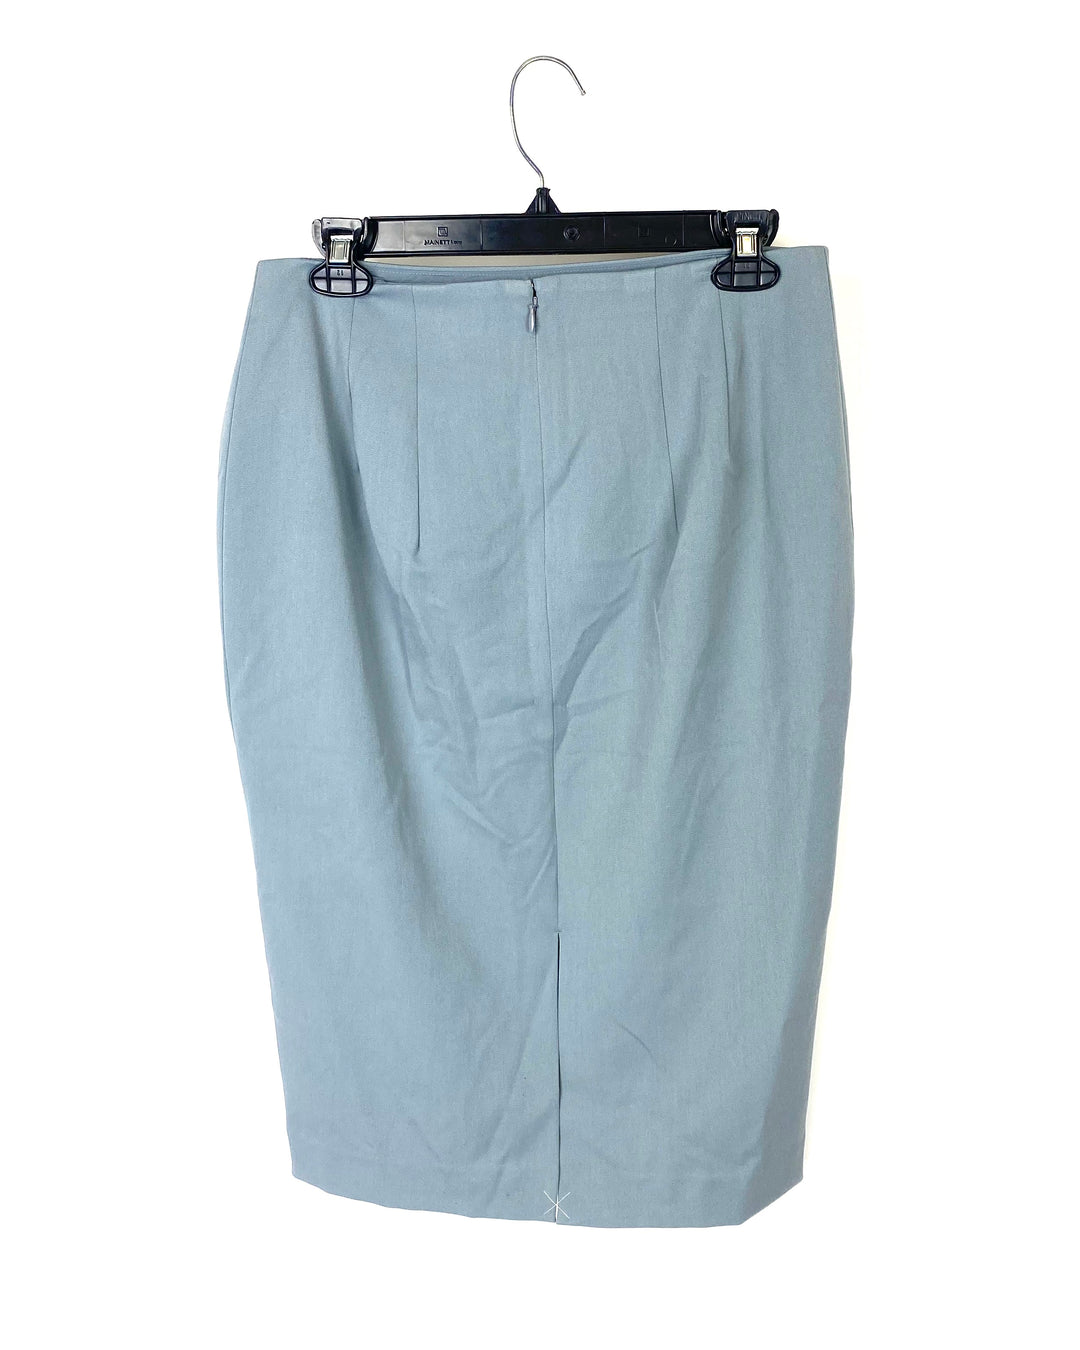 Pencil Blue Grey Skirt - Size 8